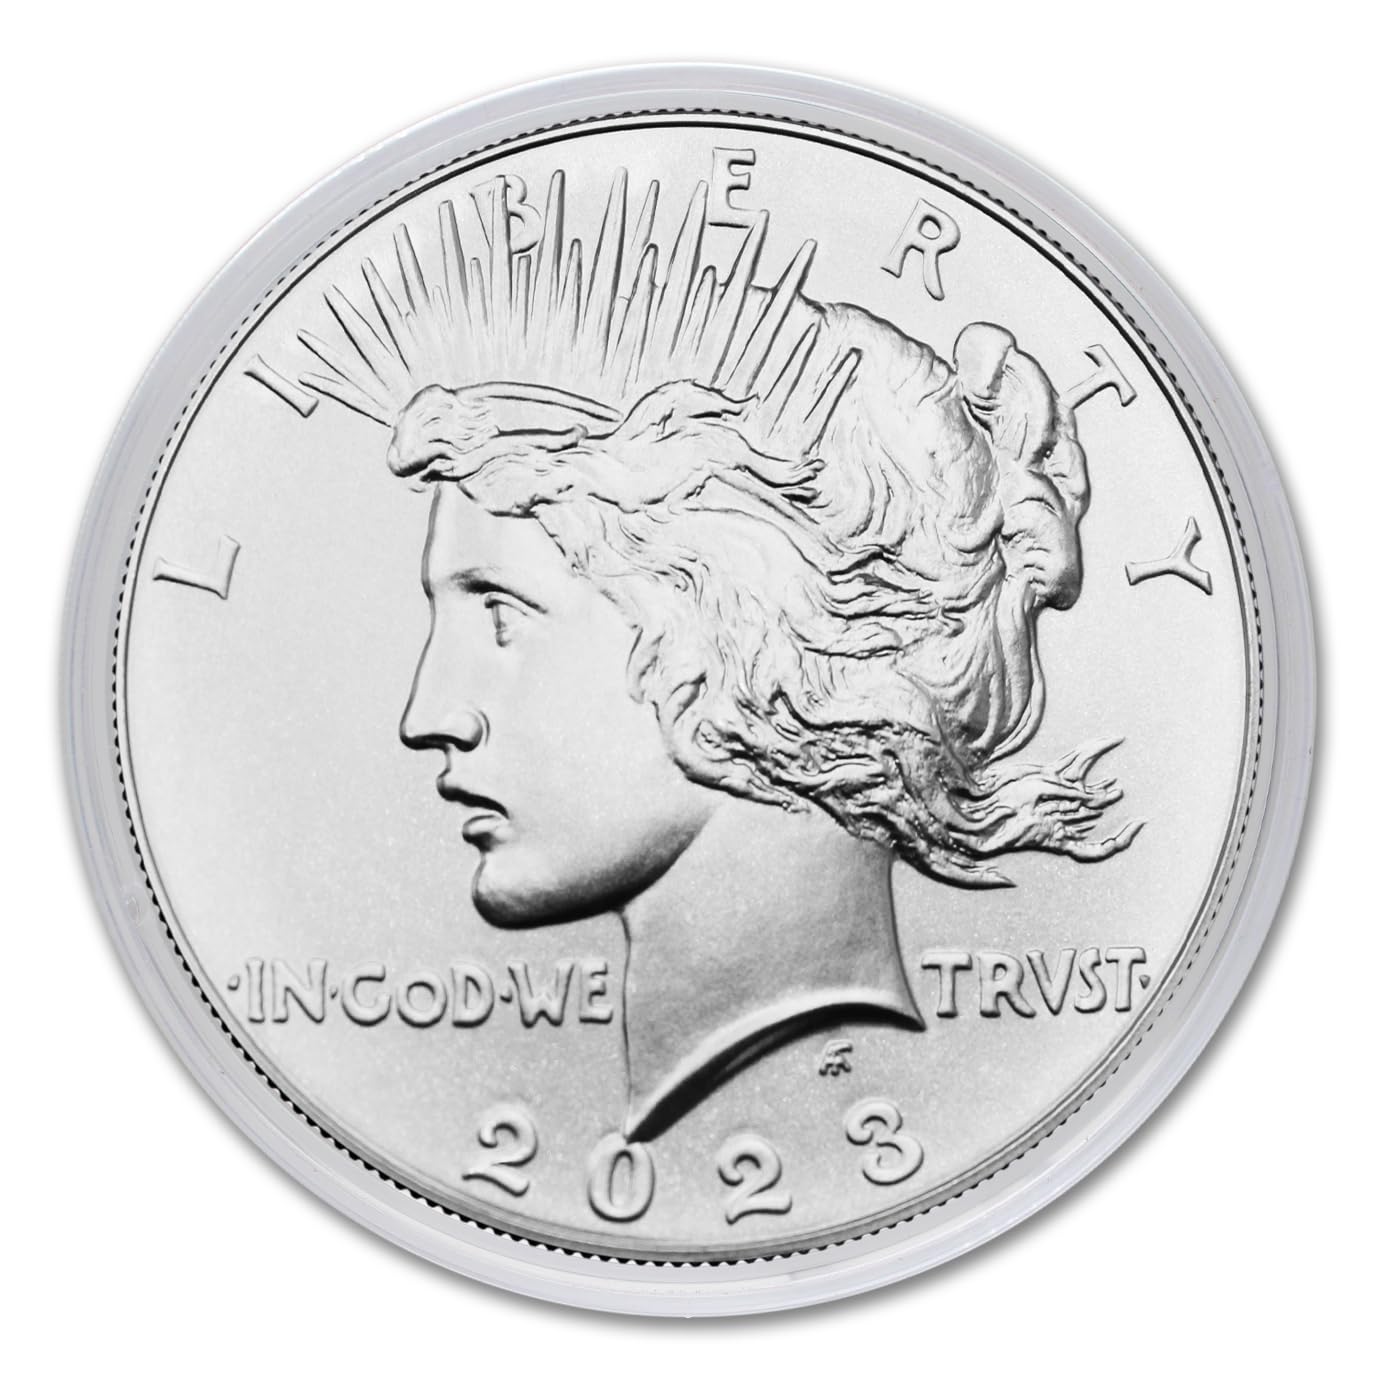 Rare 2023 1 oz Silver Peace Dollar – BU Condition with COA & Government Packaging!